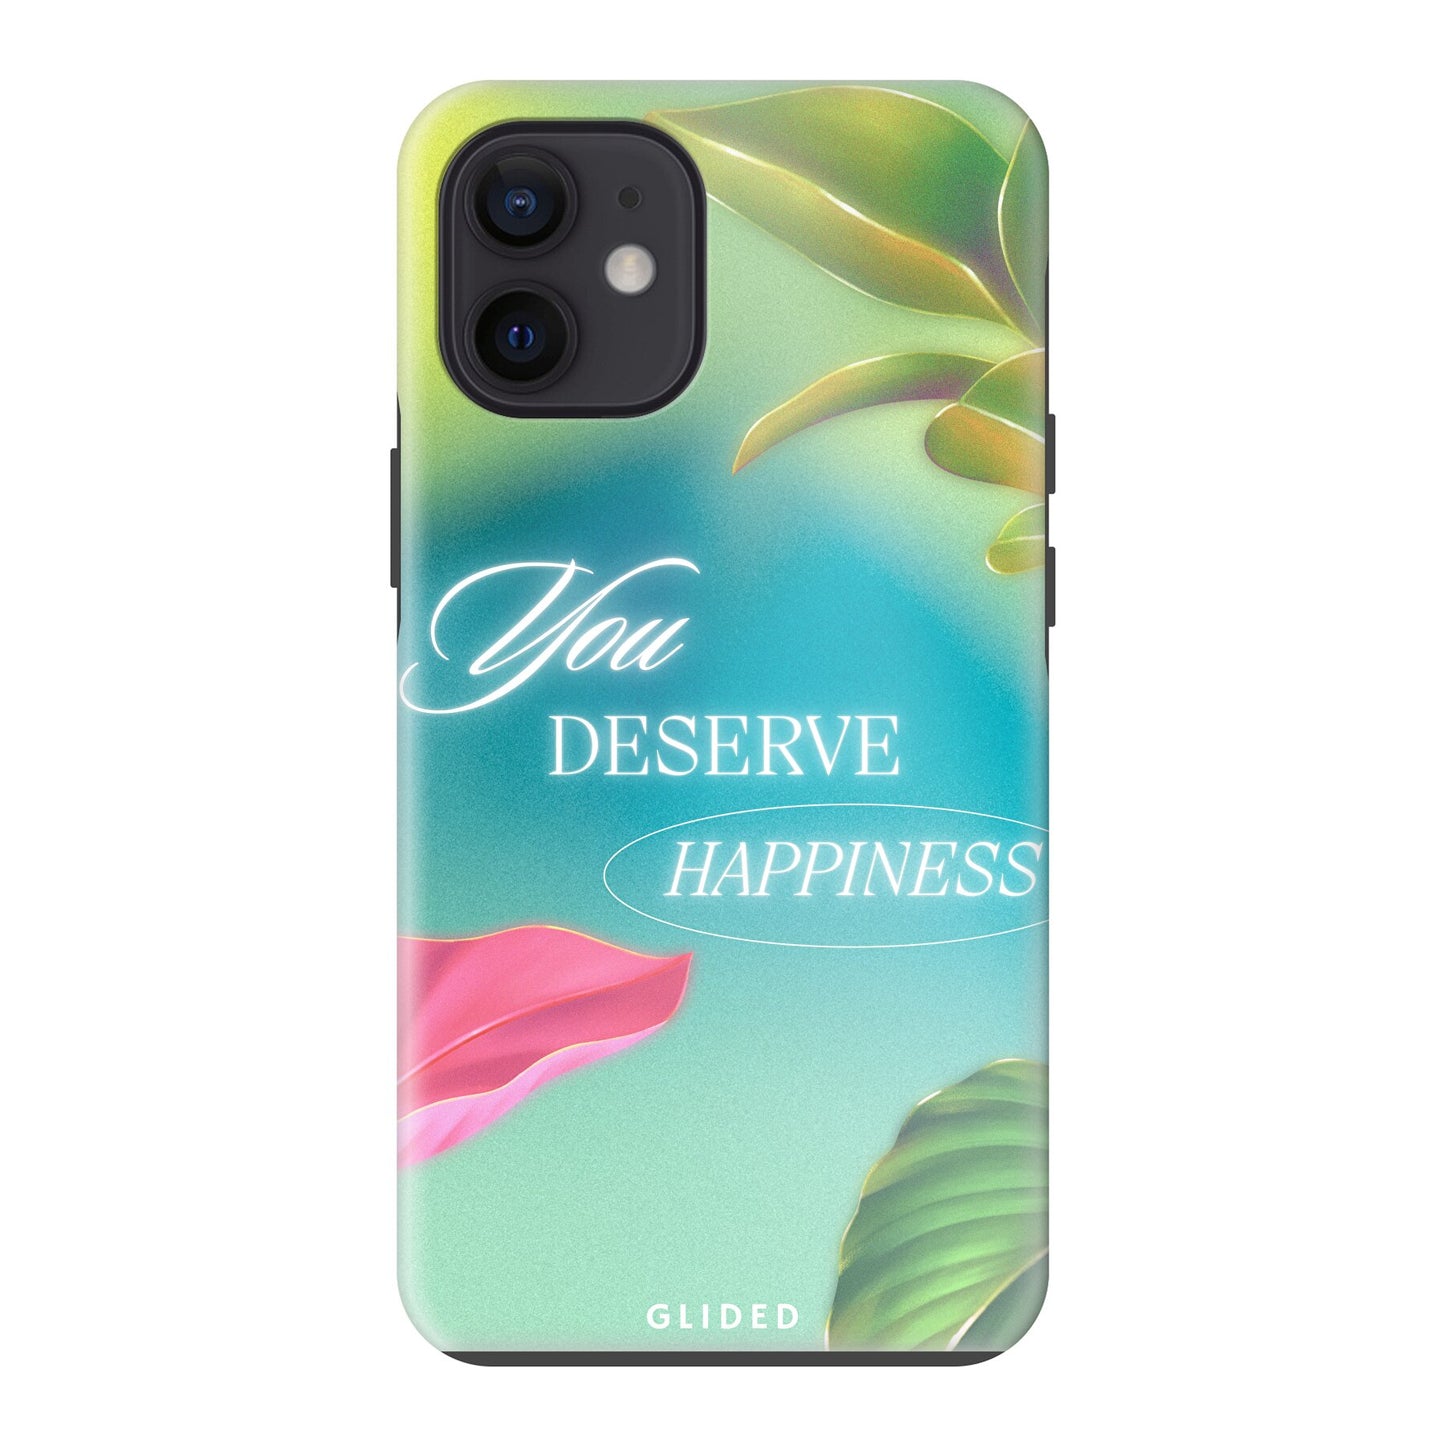 Happiness - iPhone 12 mini - Tough case